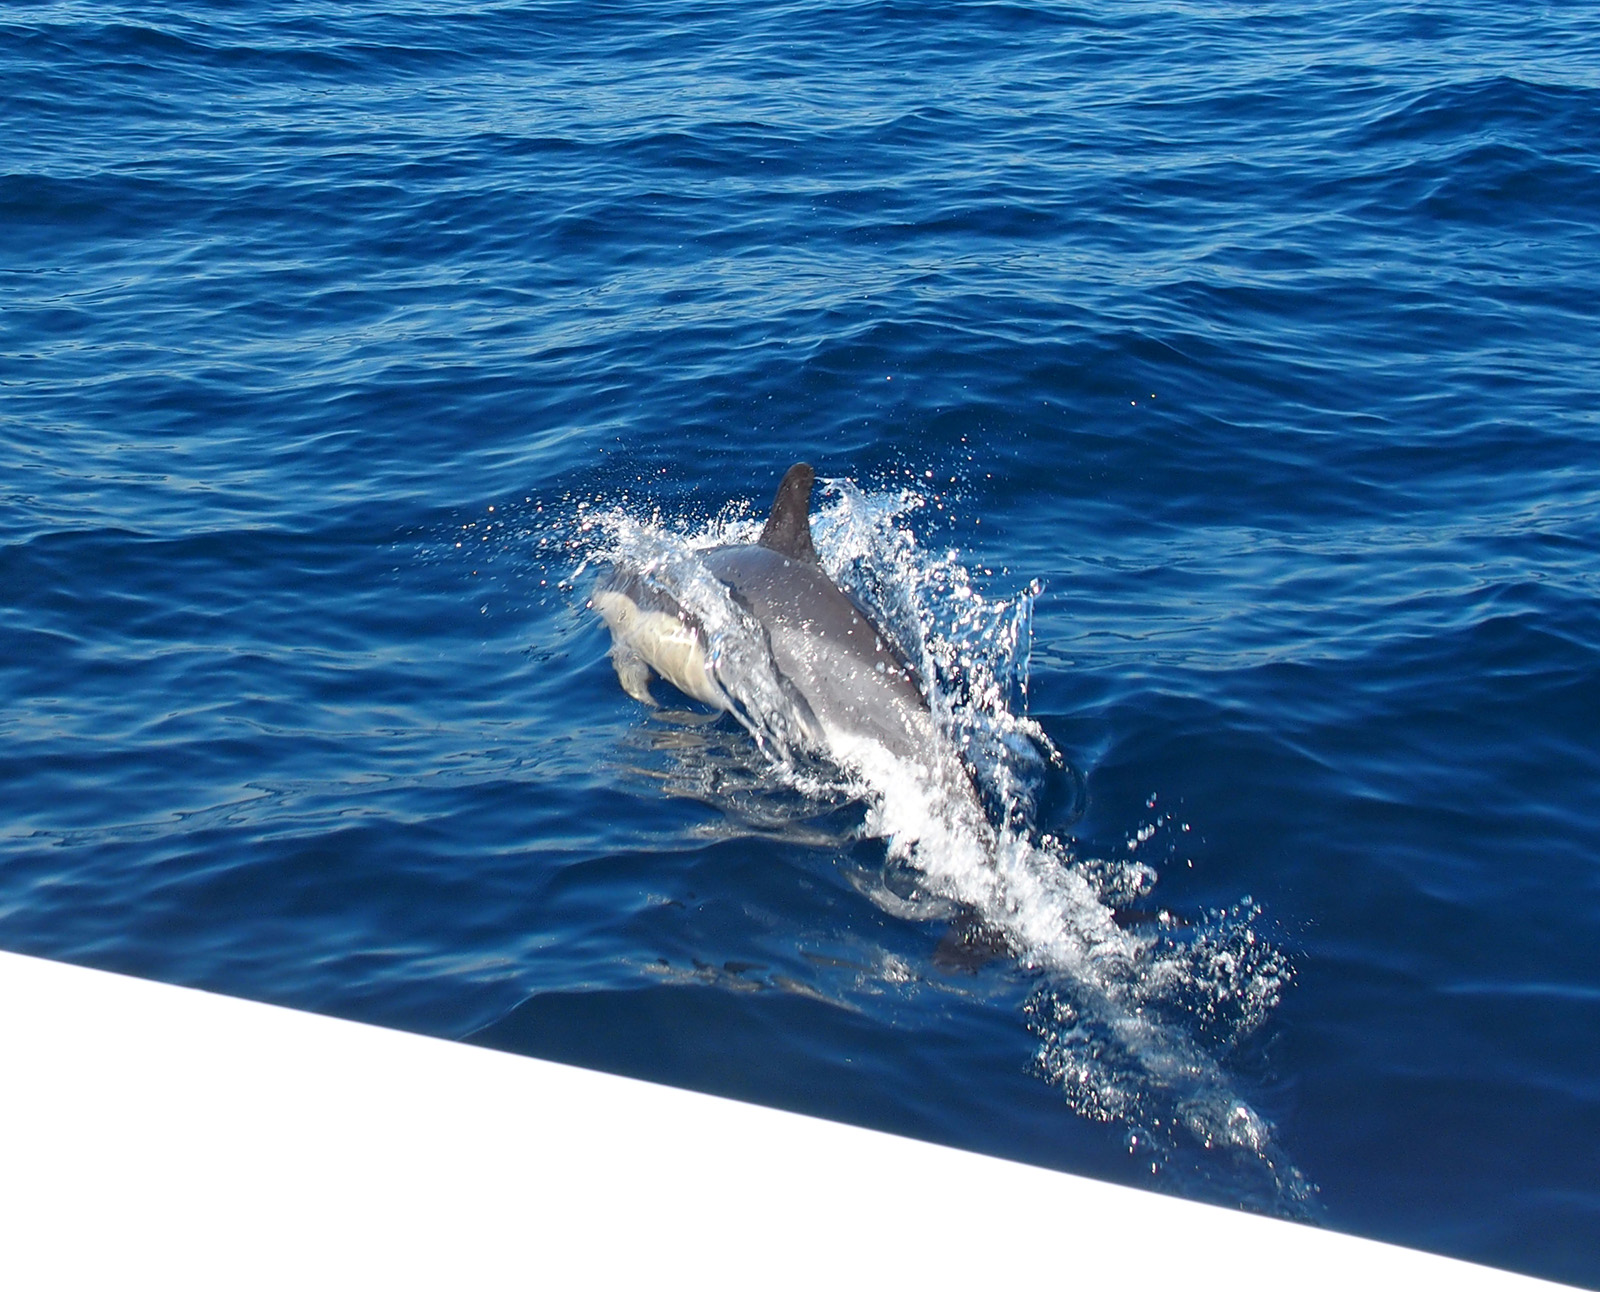 delfin2.jpg